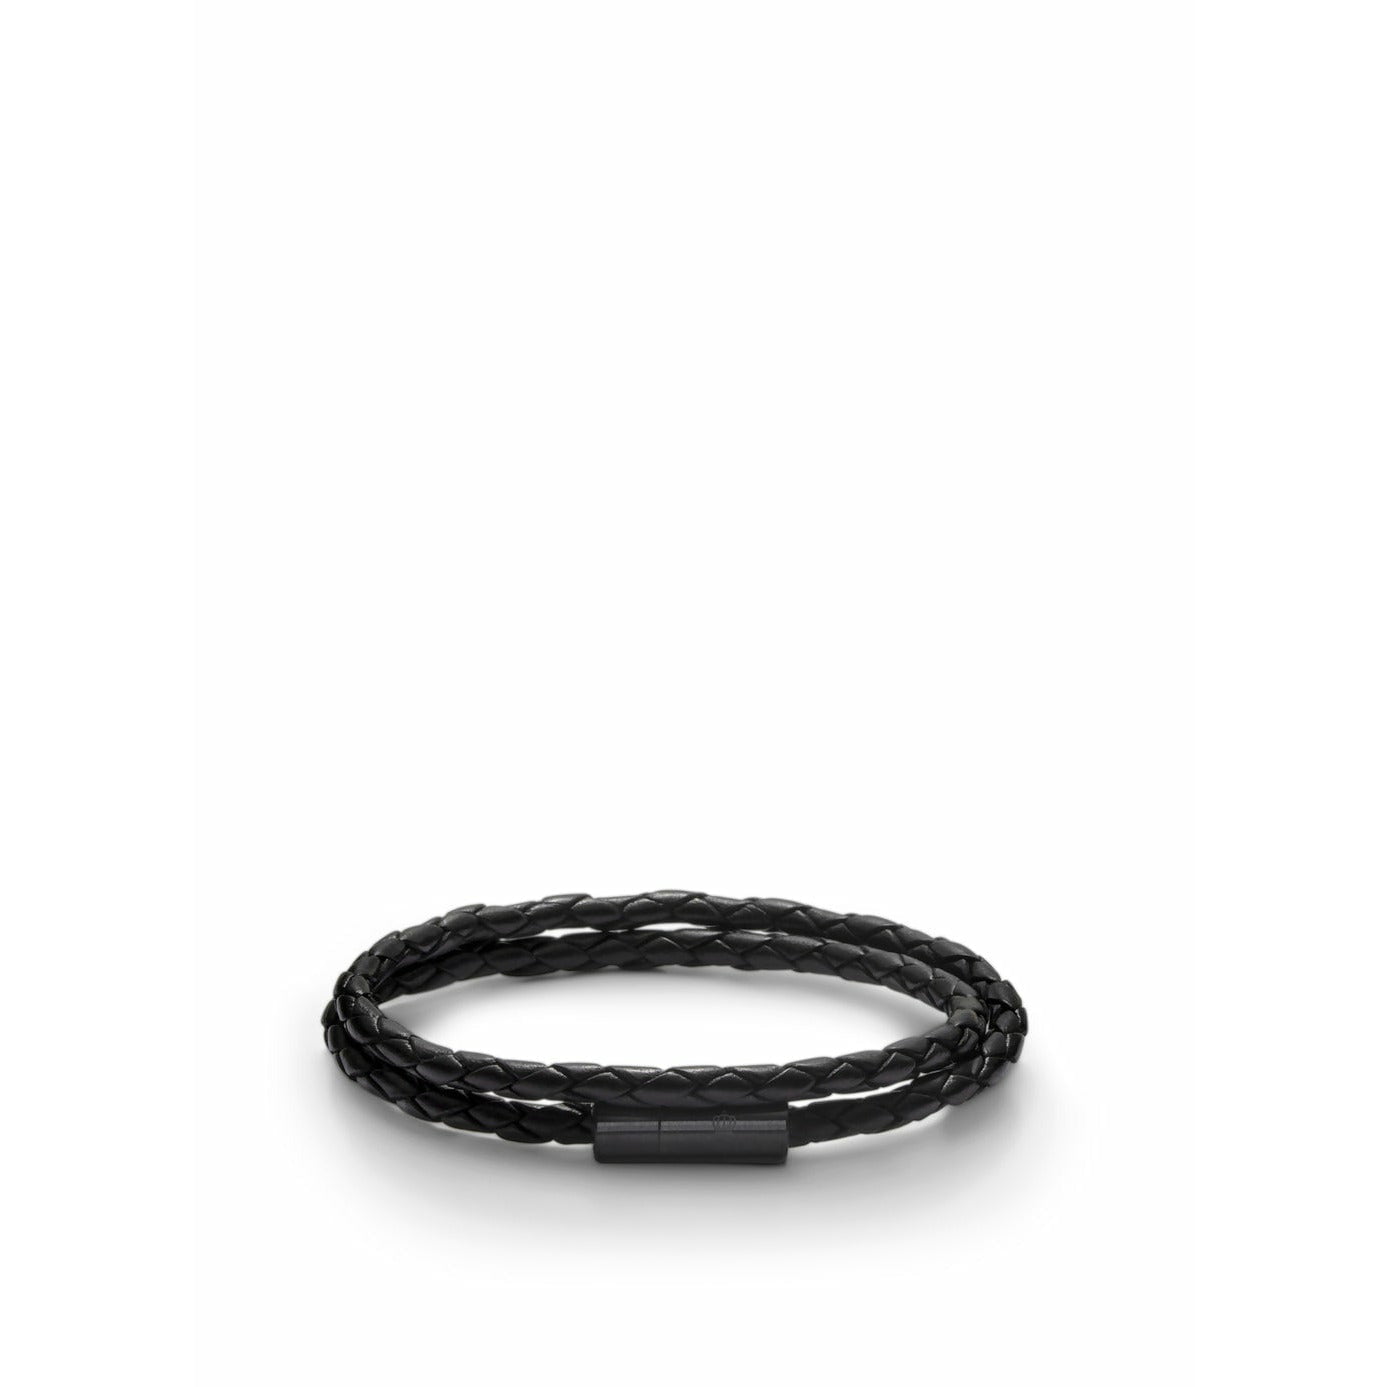 Skultuna Leather Bracelet 4mm Small ø14,5 Cm, Black Titanium